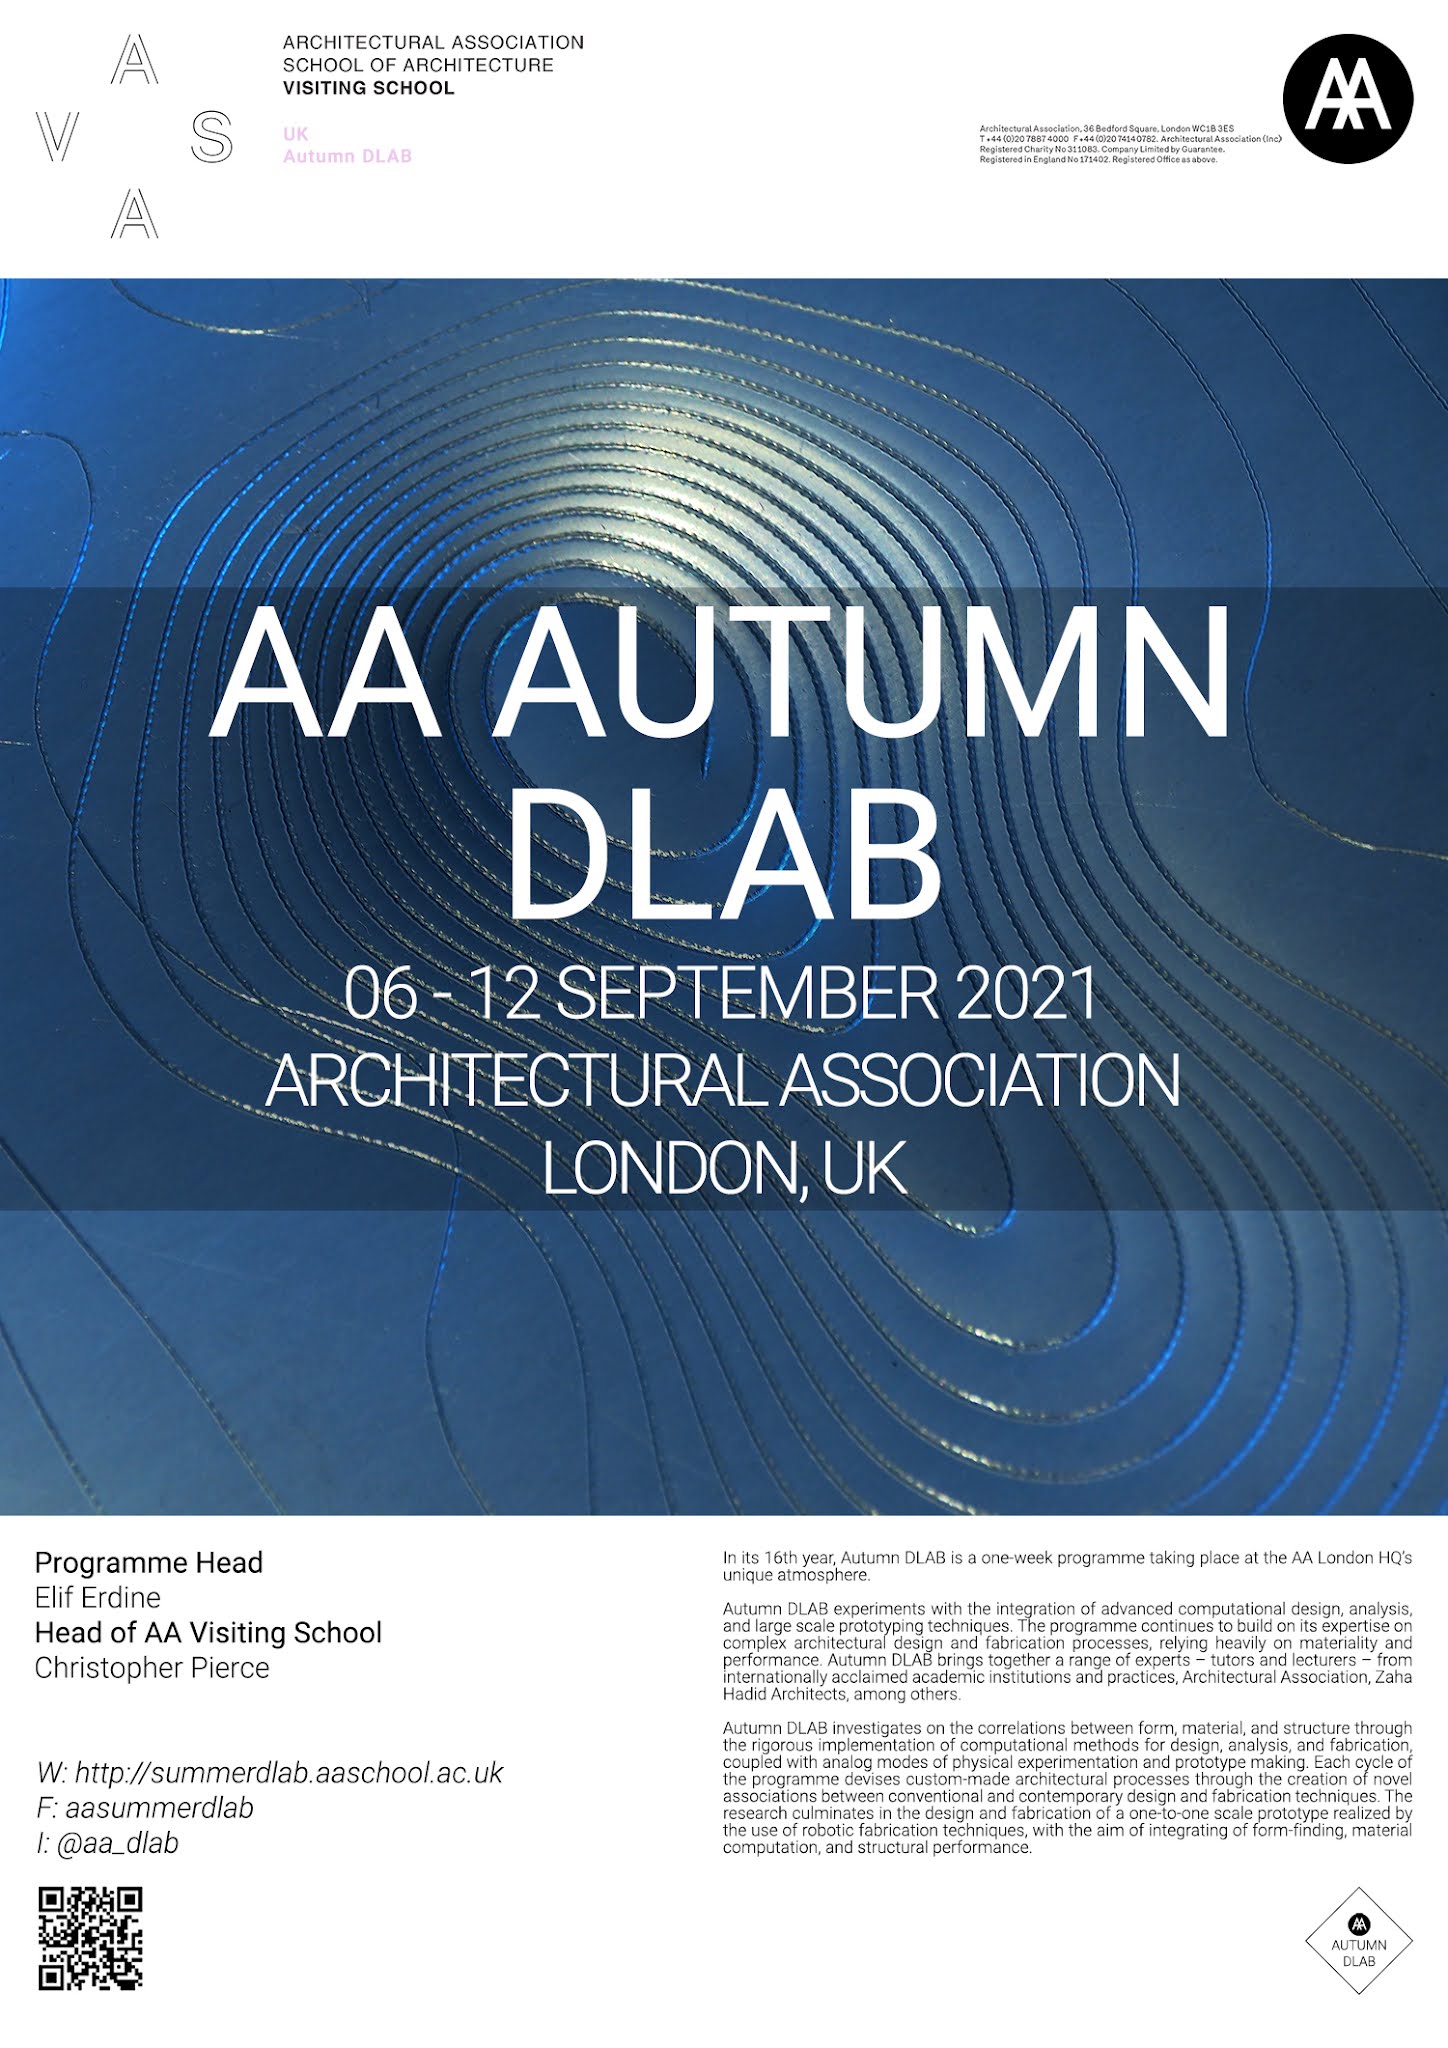 Rhino News, etc.: AA Autumn DLAB (London) - Sep 6-12, 2021